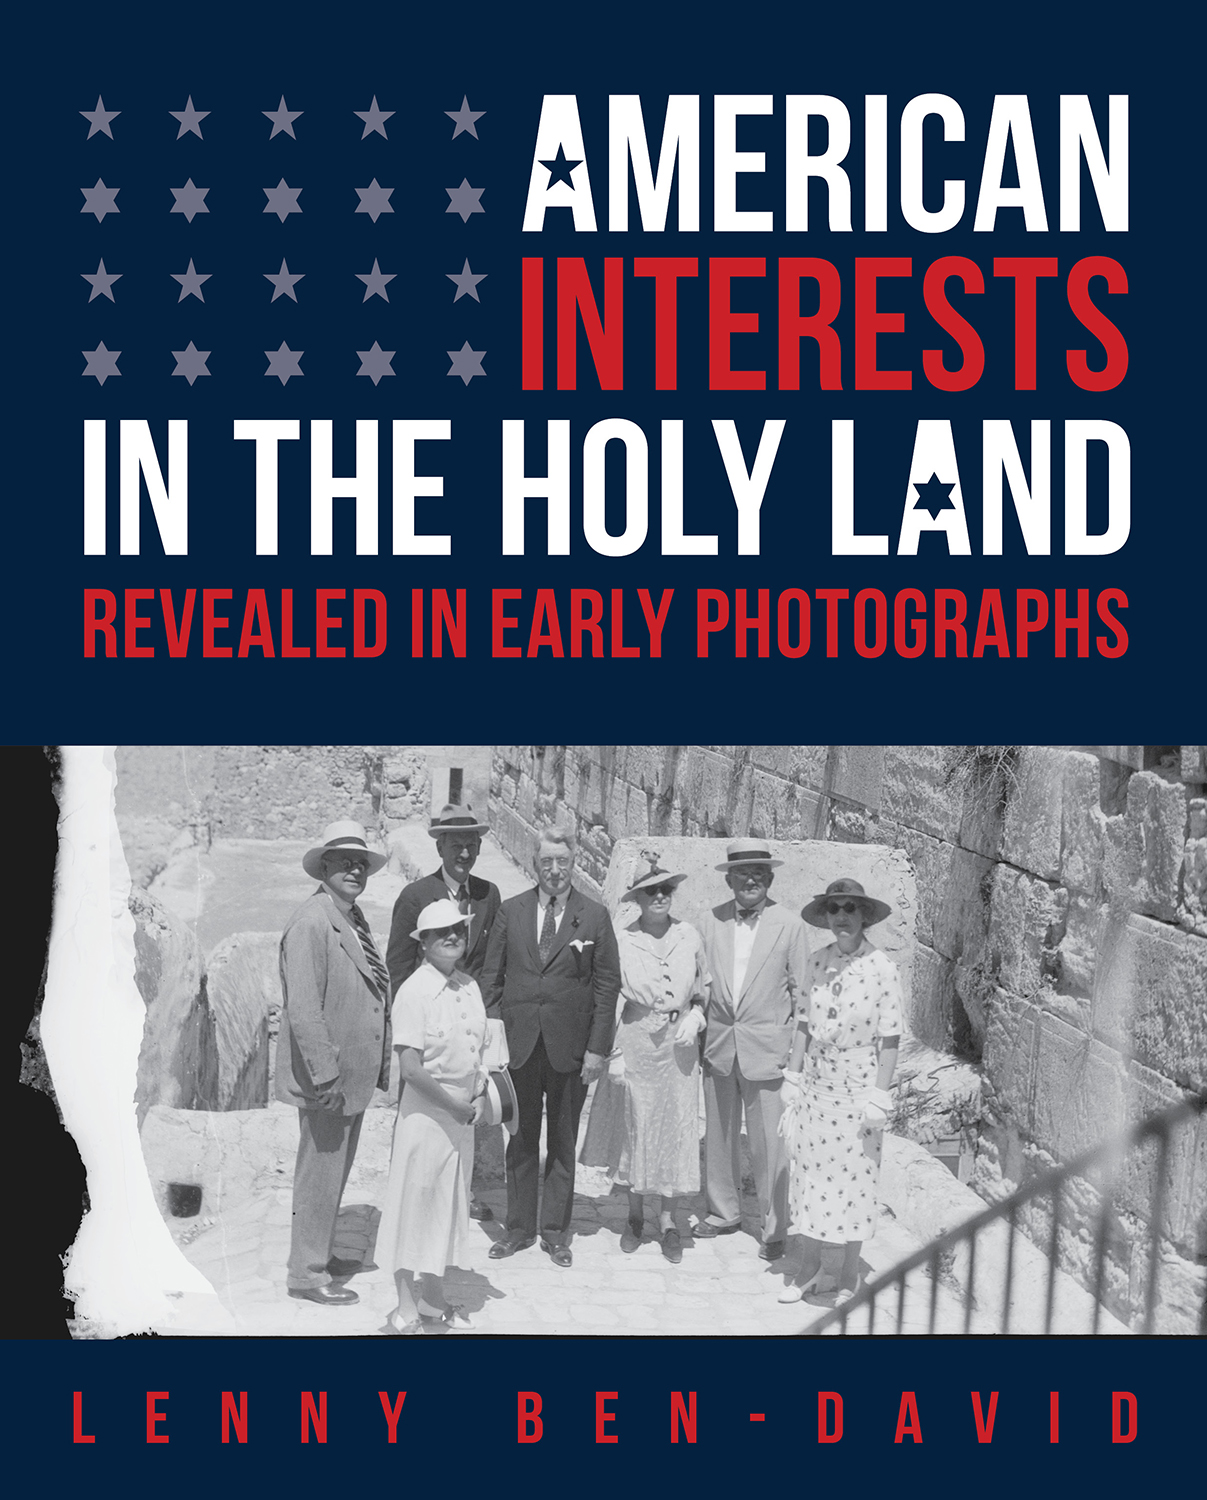 Americans interest